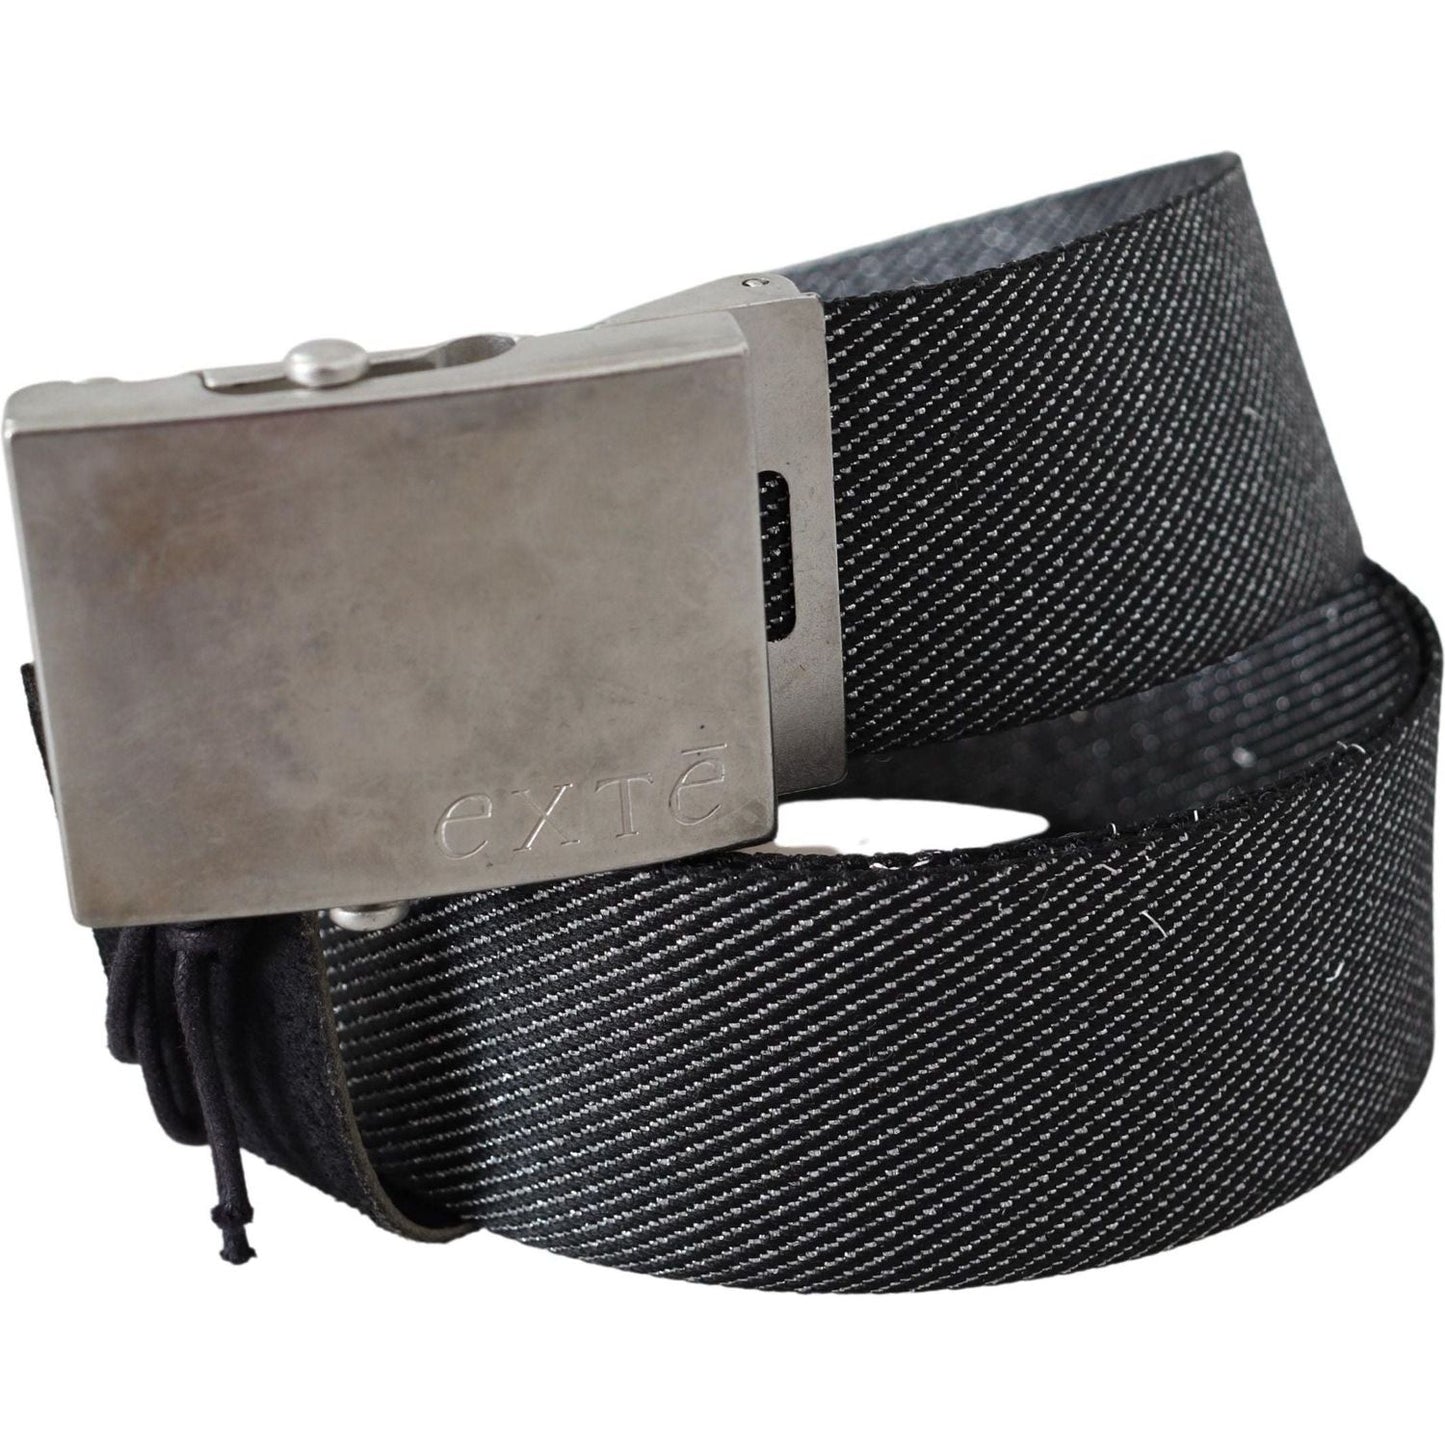 Exte Elegant Black Canvas Waist Belt with Silver Buckle Belt black-silver-metal-brushed-buckle-waist-belt